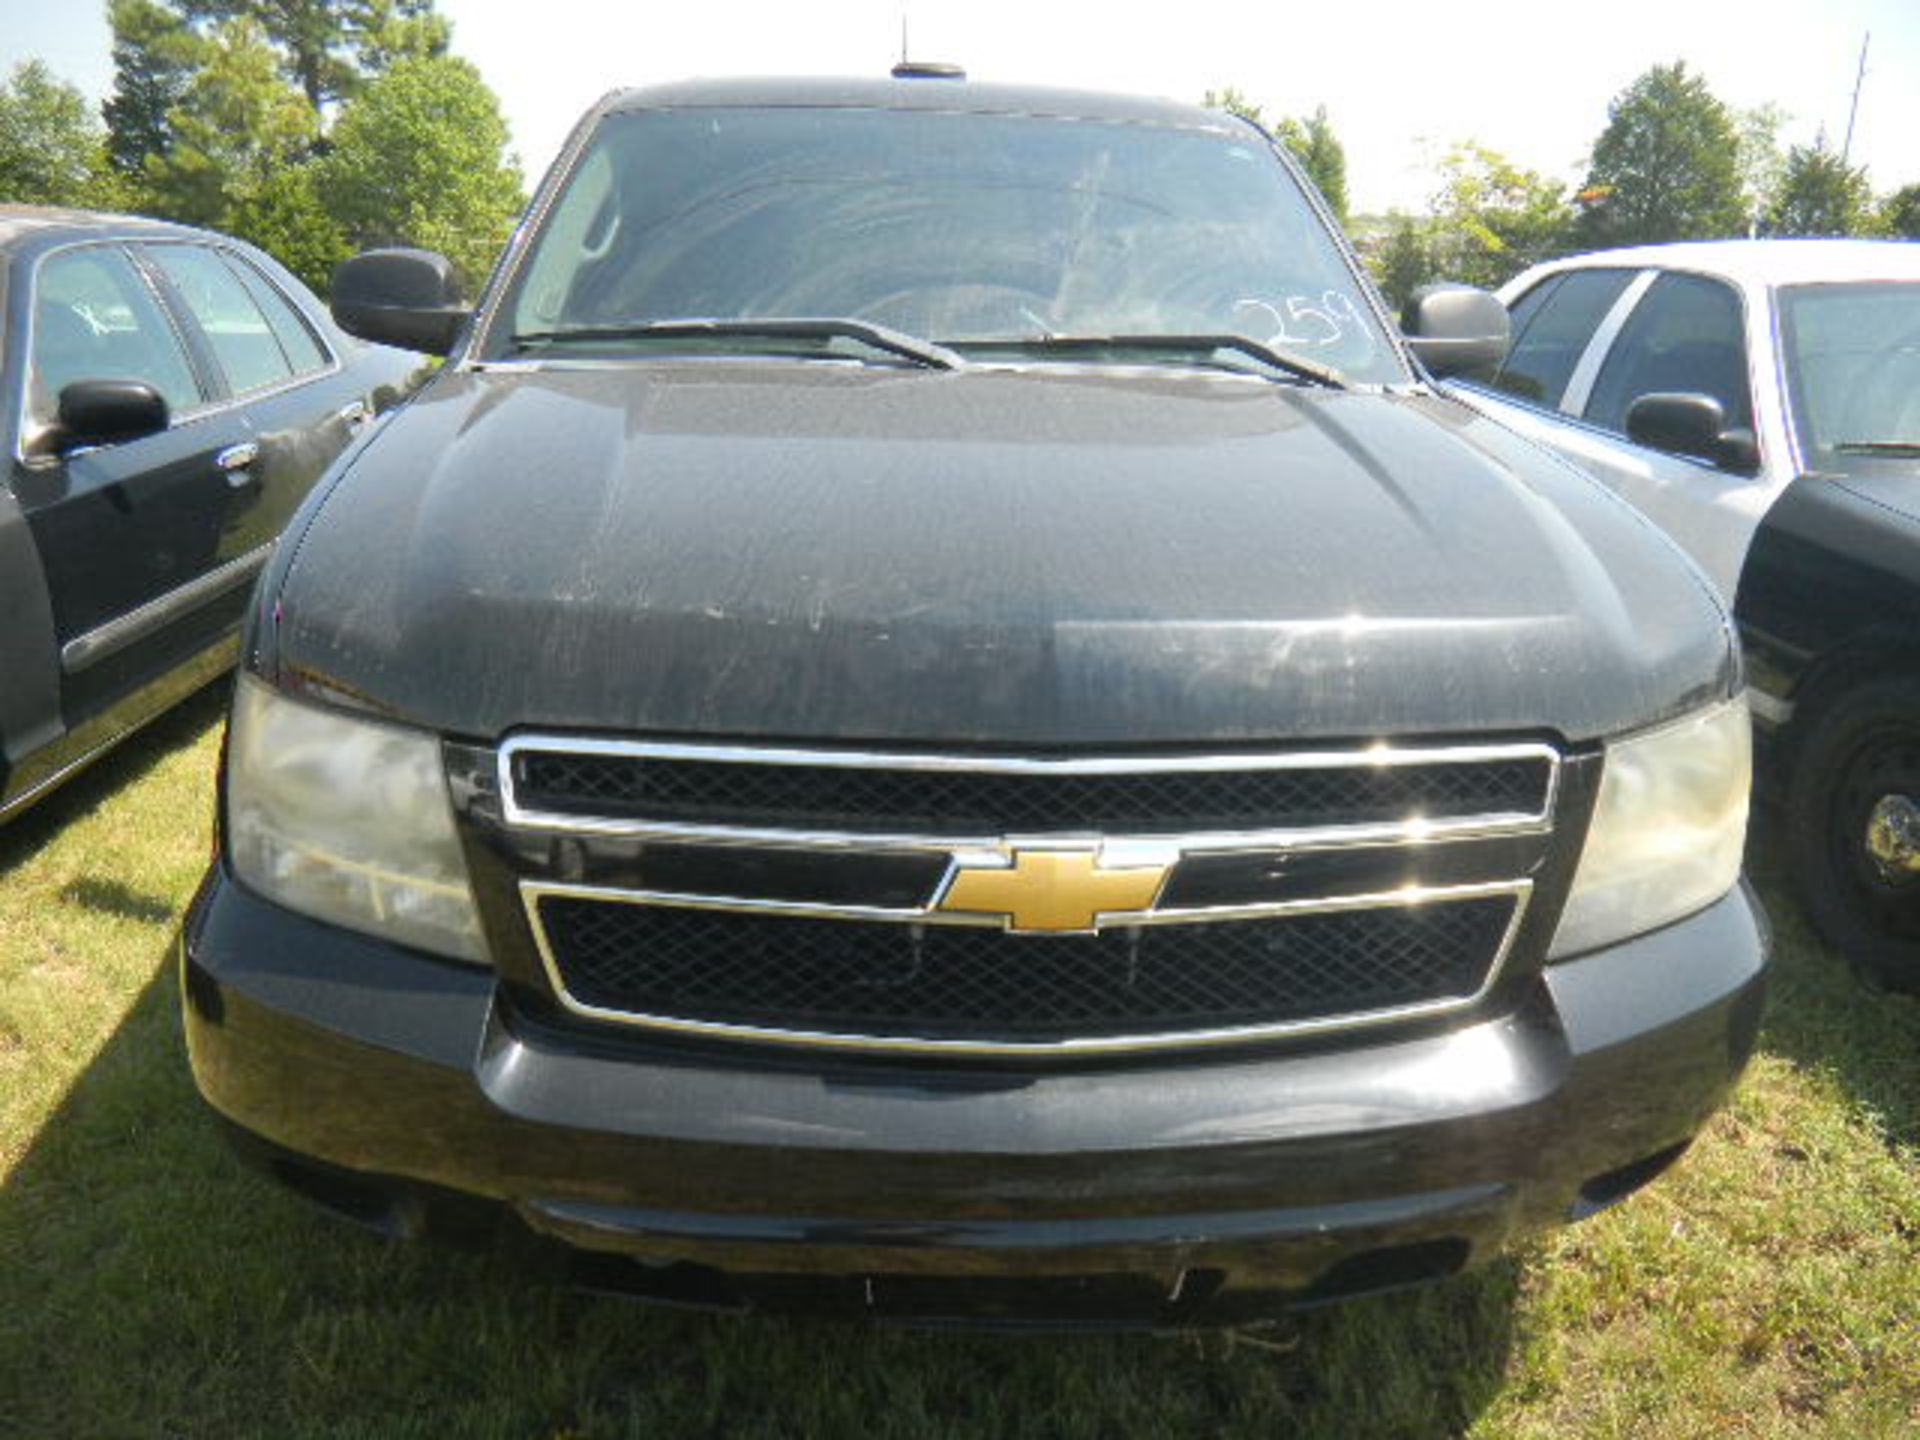 2010 Chevrolet Tahoe Black Patrol SUV - Asset I.D. #259 - Last of Vin (220846) - Image 3 of 9